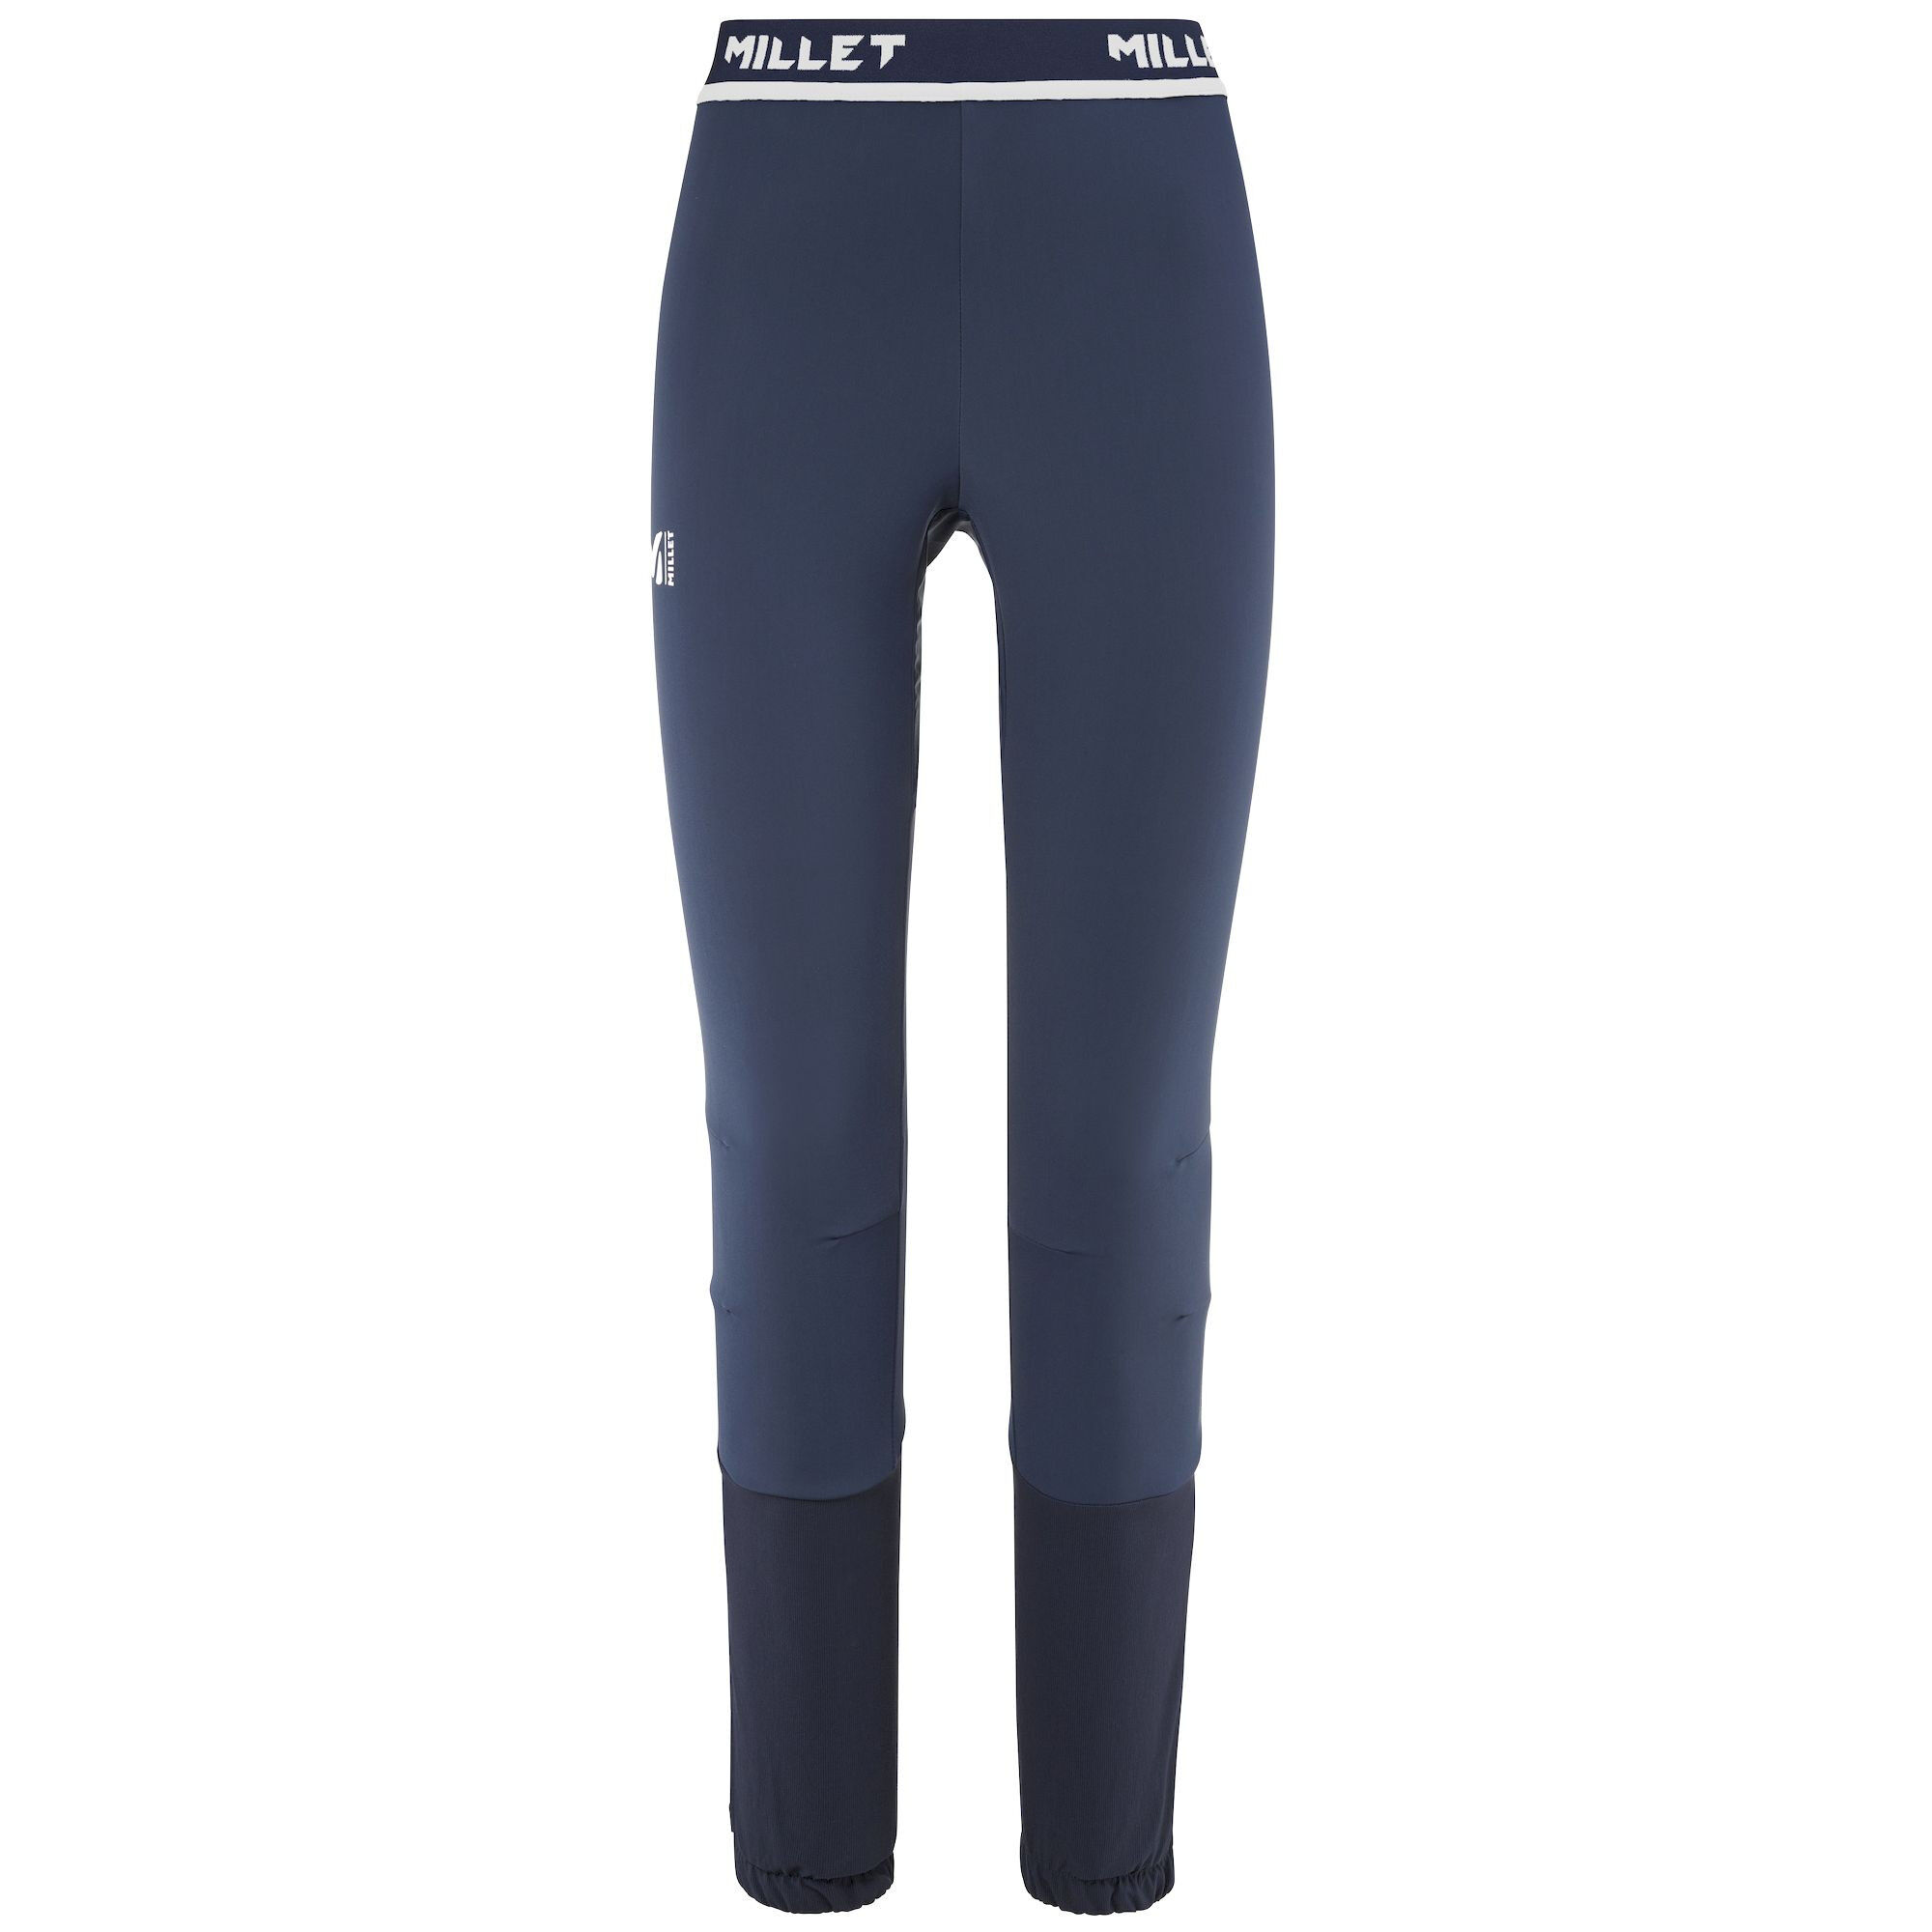 Millet Pierra Tight - Ski pants - Women's